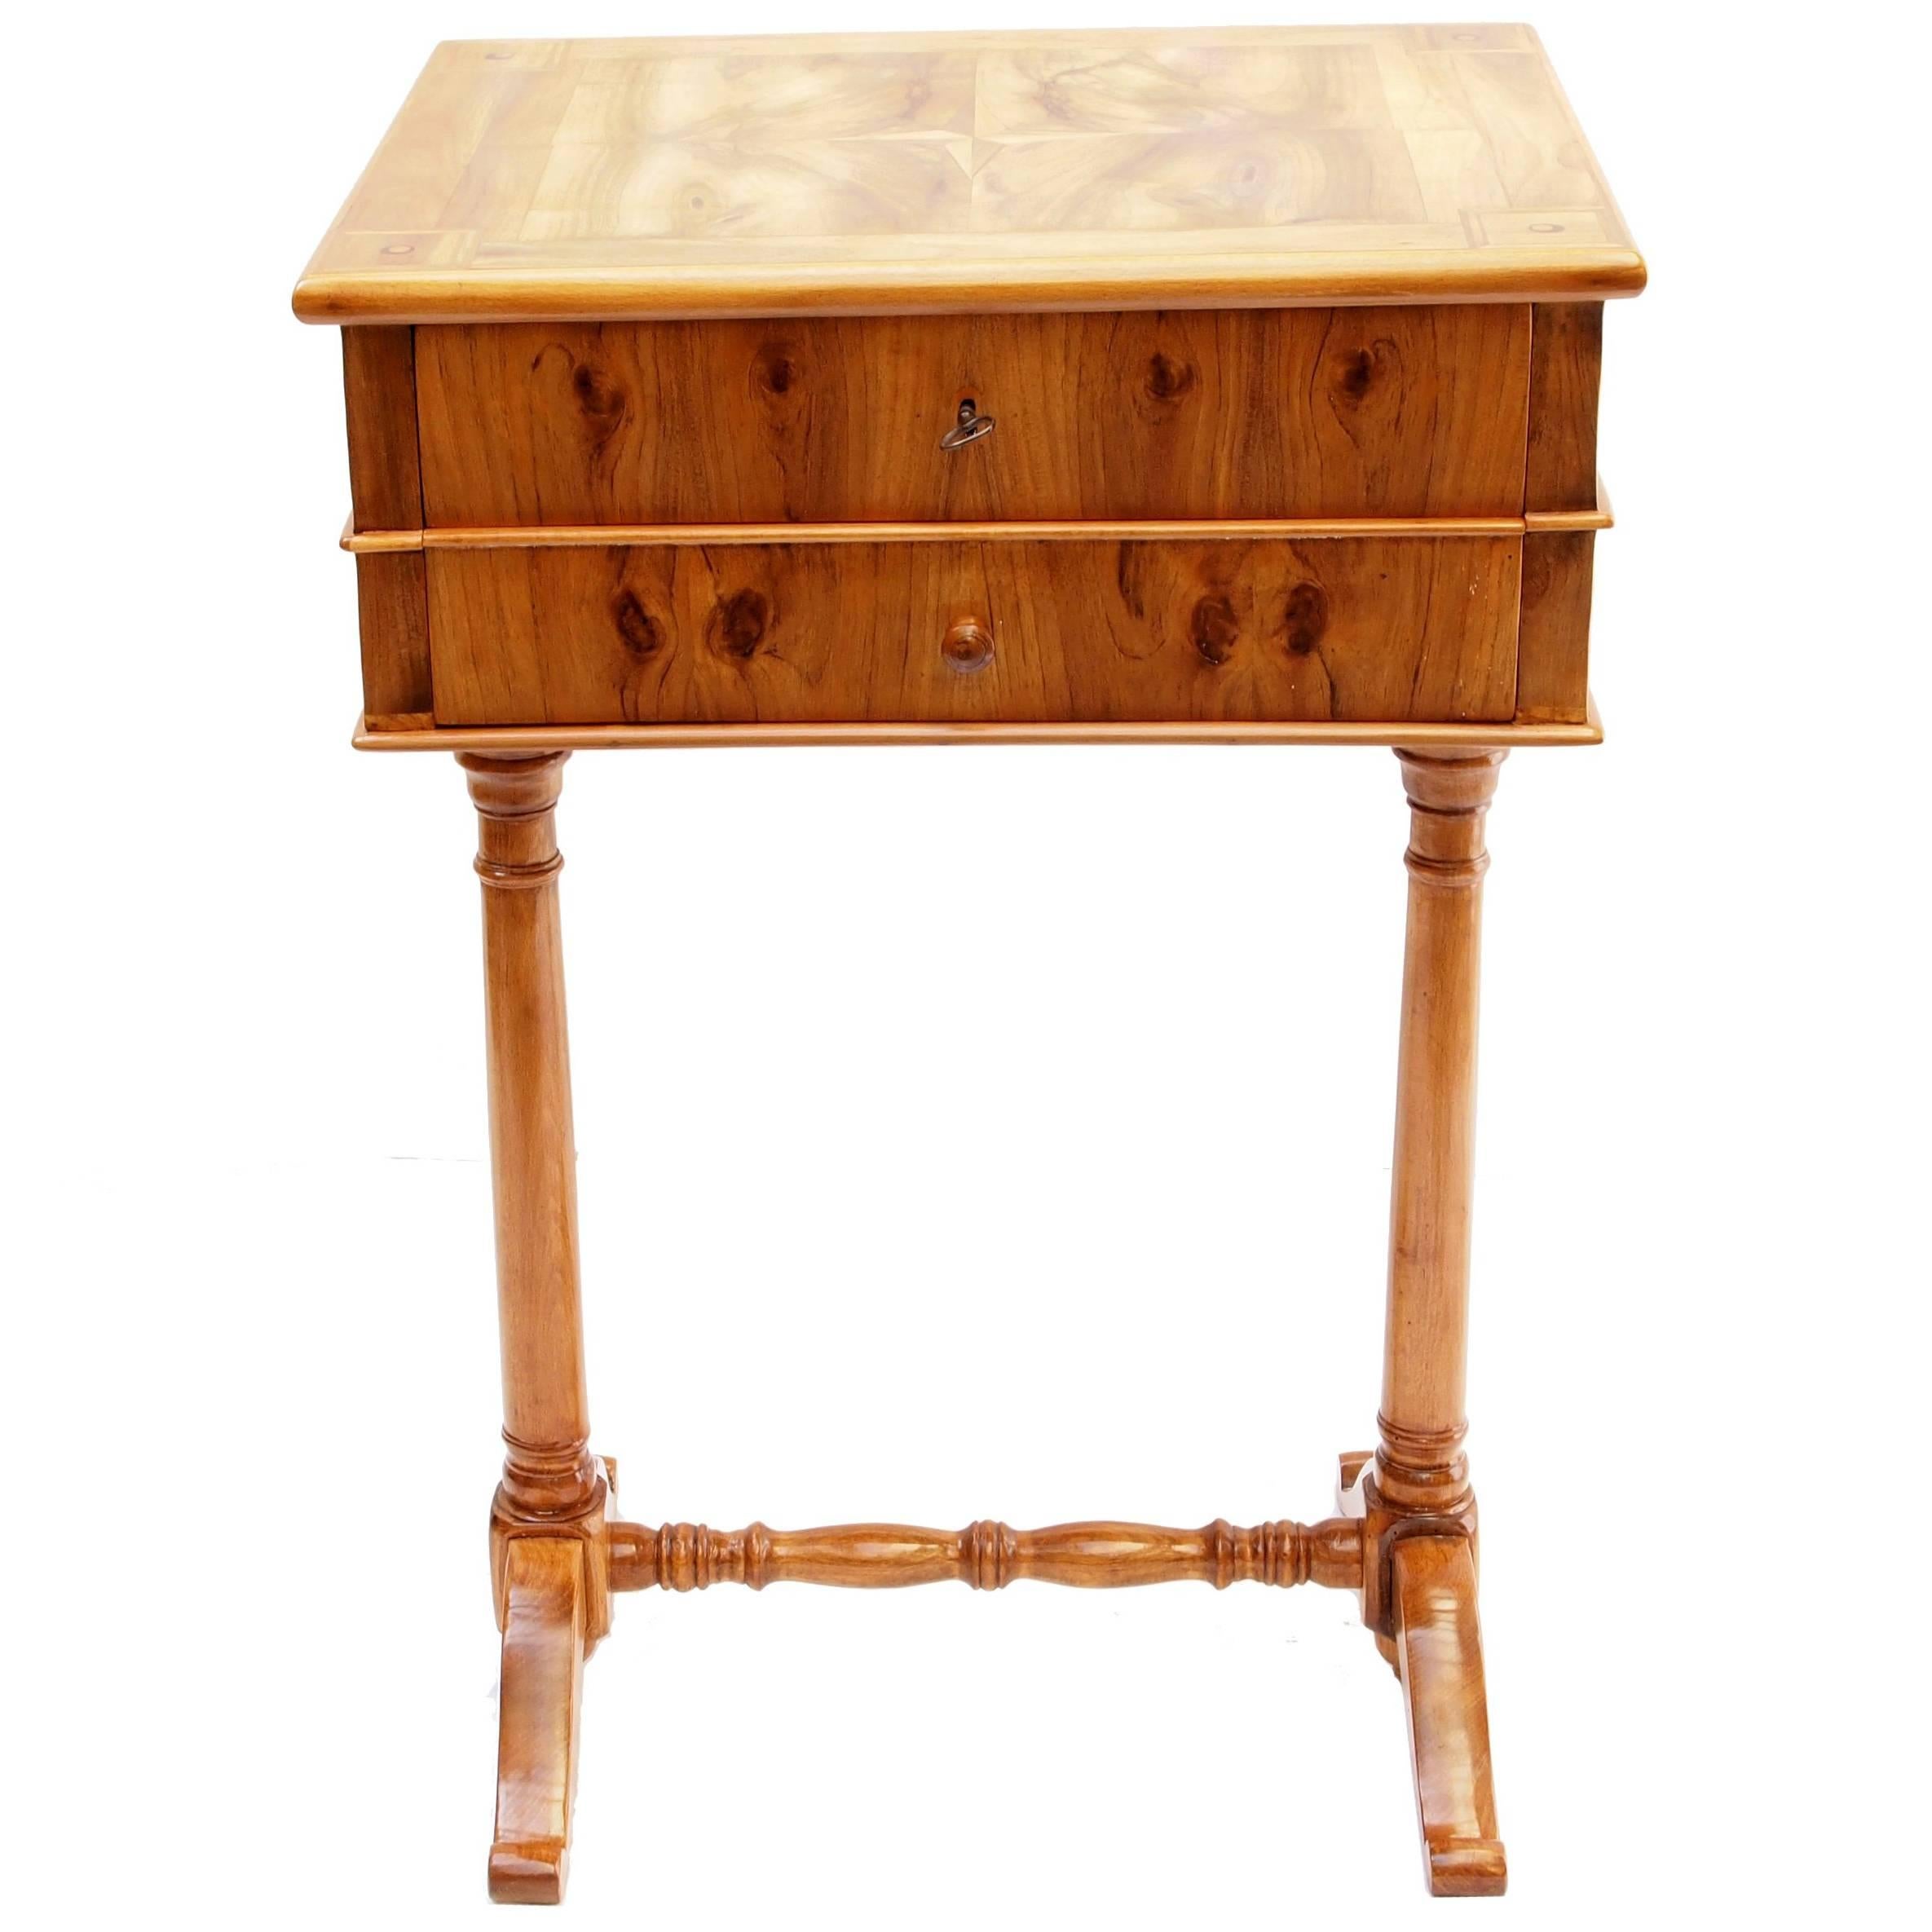 19th Century Biedermeier Walnut Sewing Table from Germany